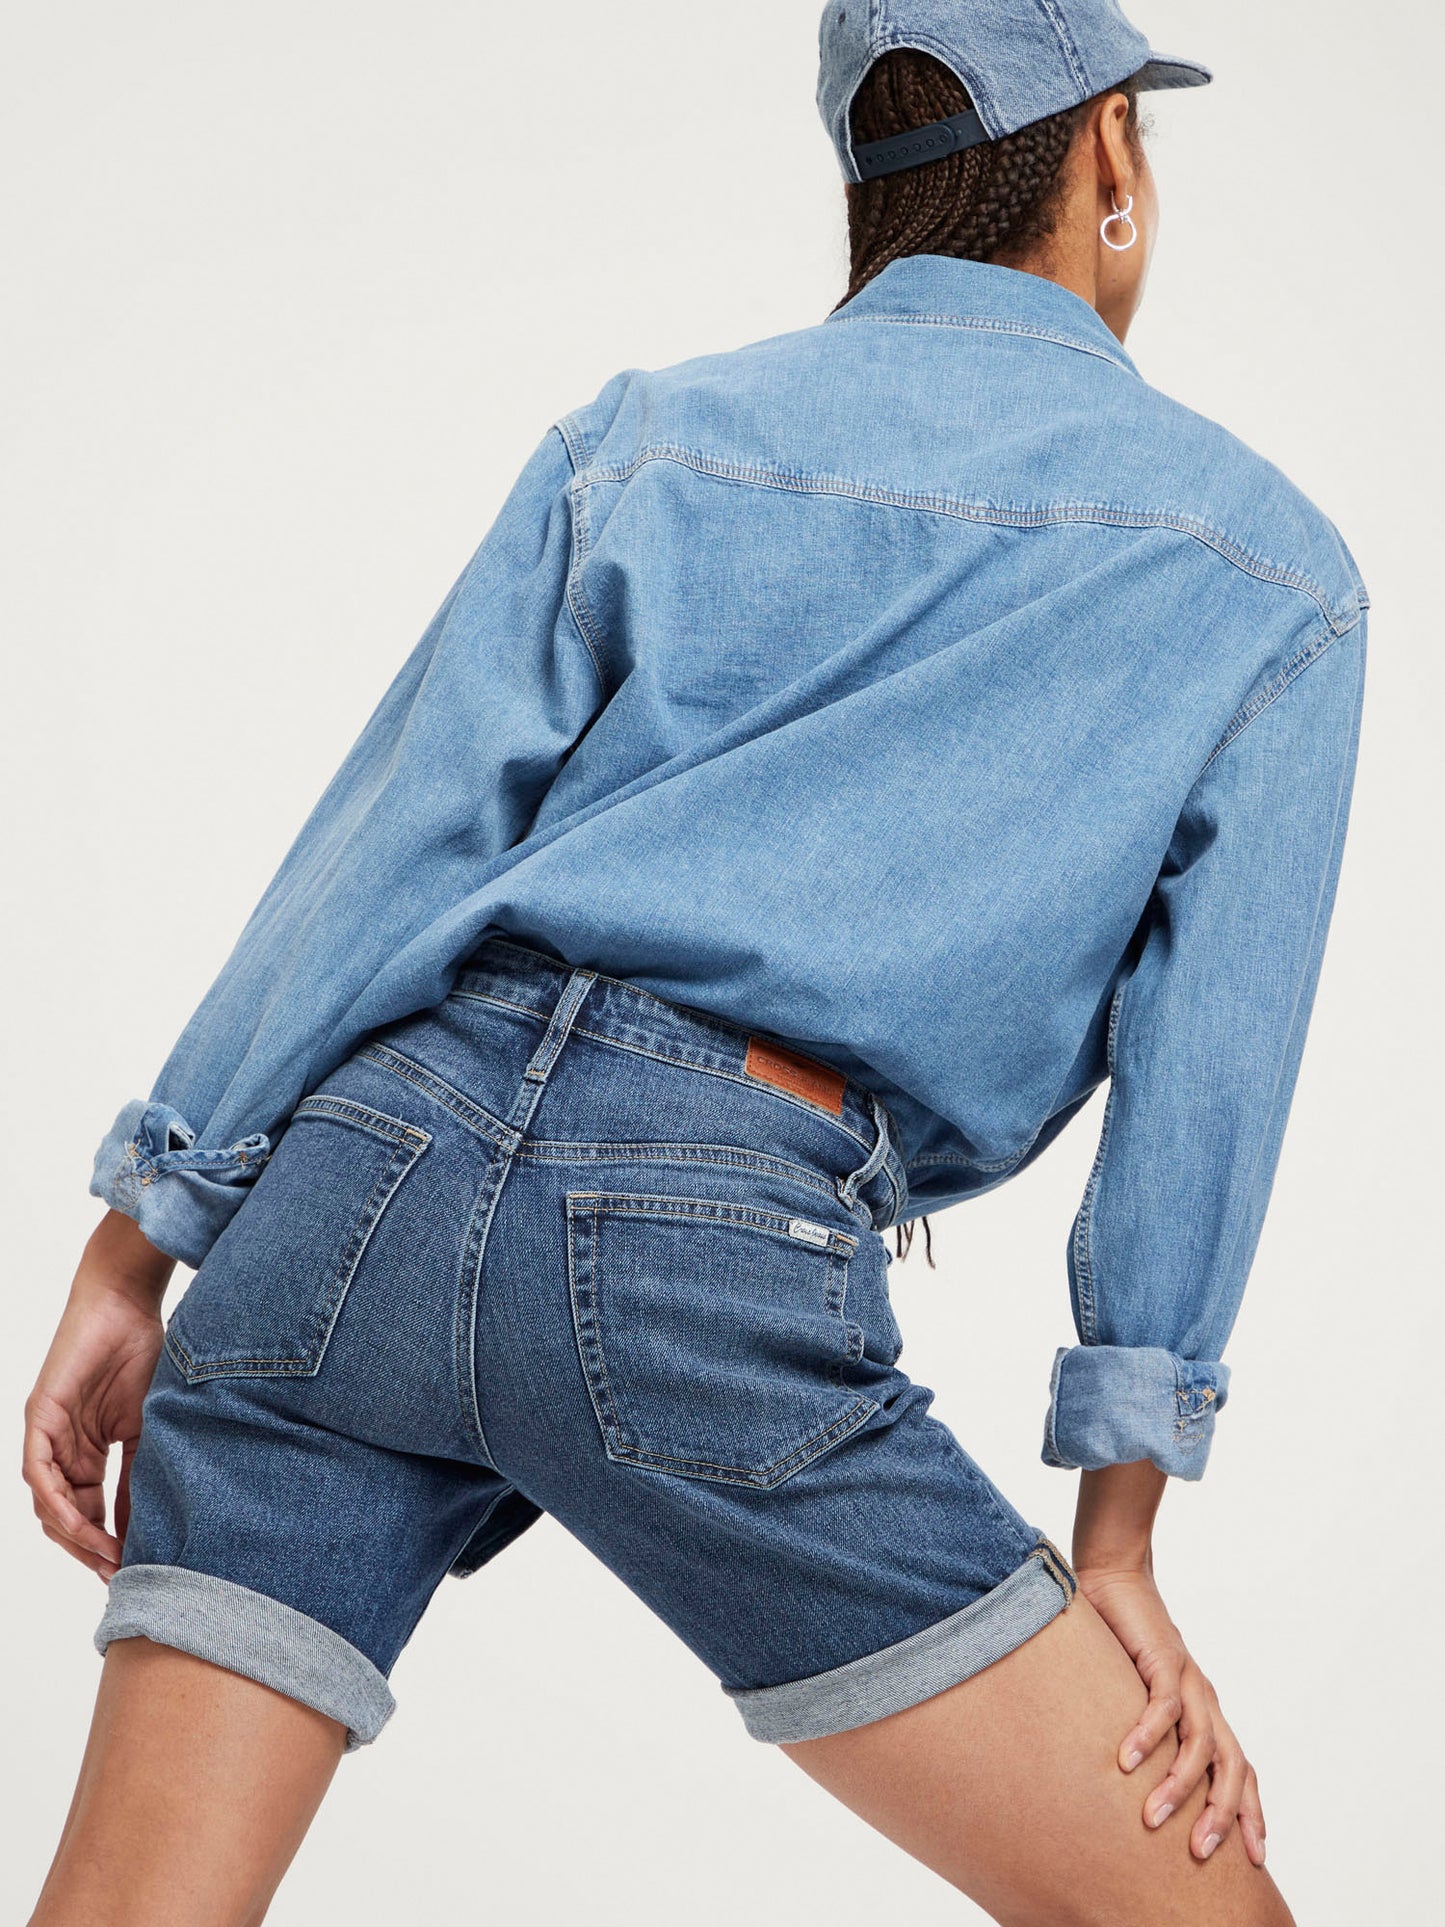 Brooke Damen Jeans-Shorts Mid Waist blau